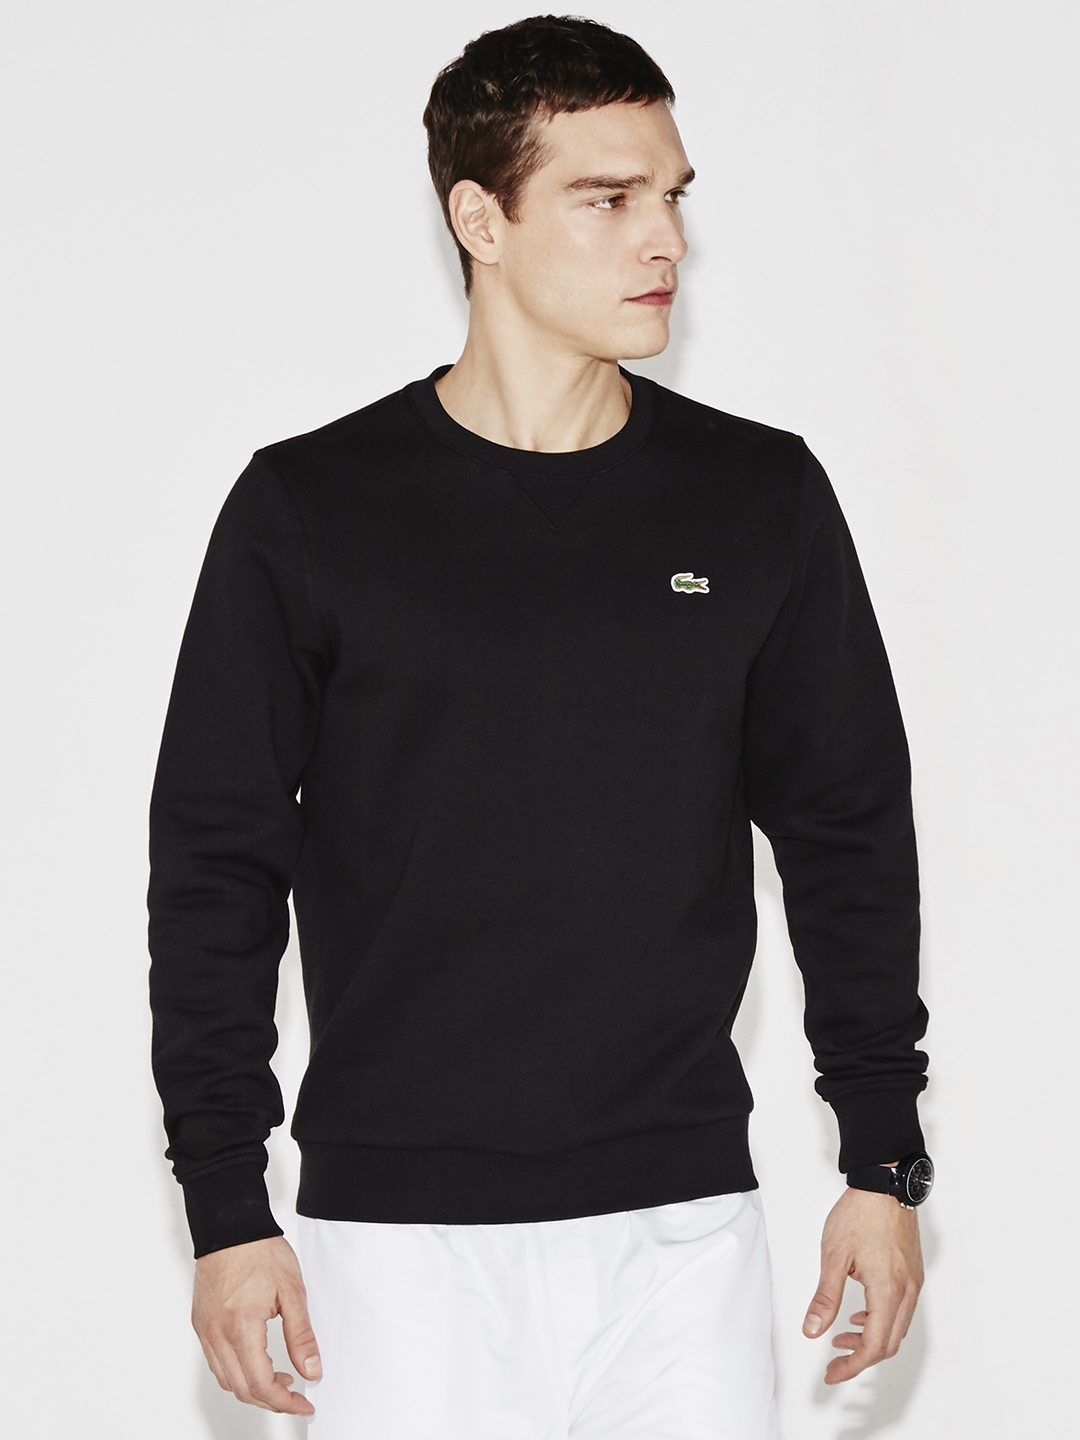 Buy Lacoste Men Black Solid Sweatshirt - Sweatshirts for Men 2281274 Myntra